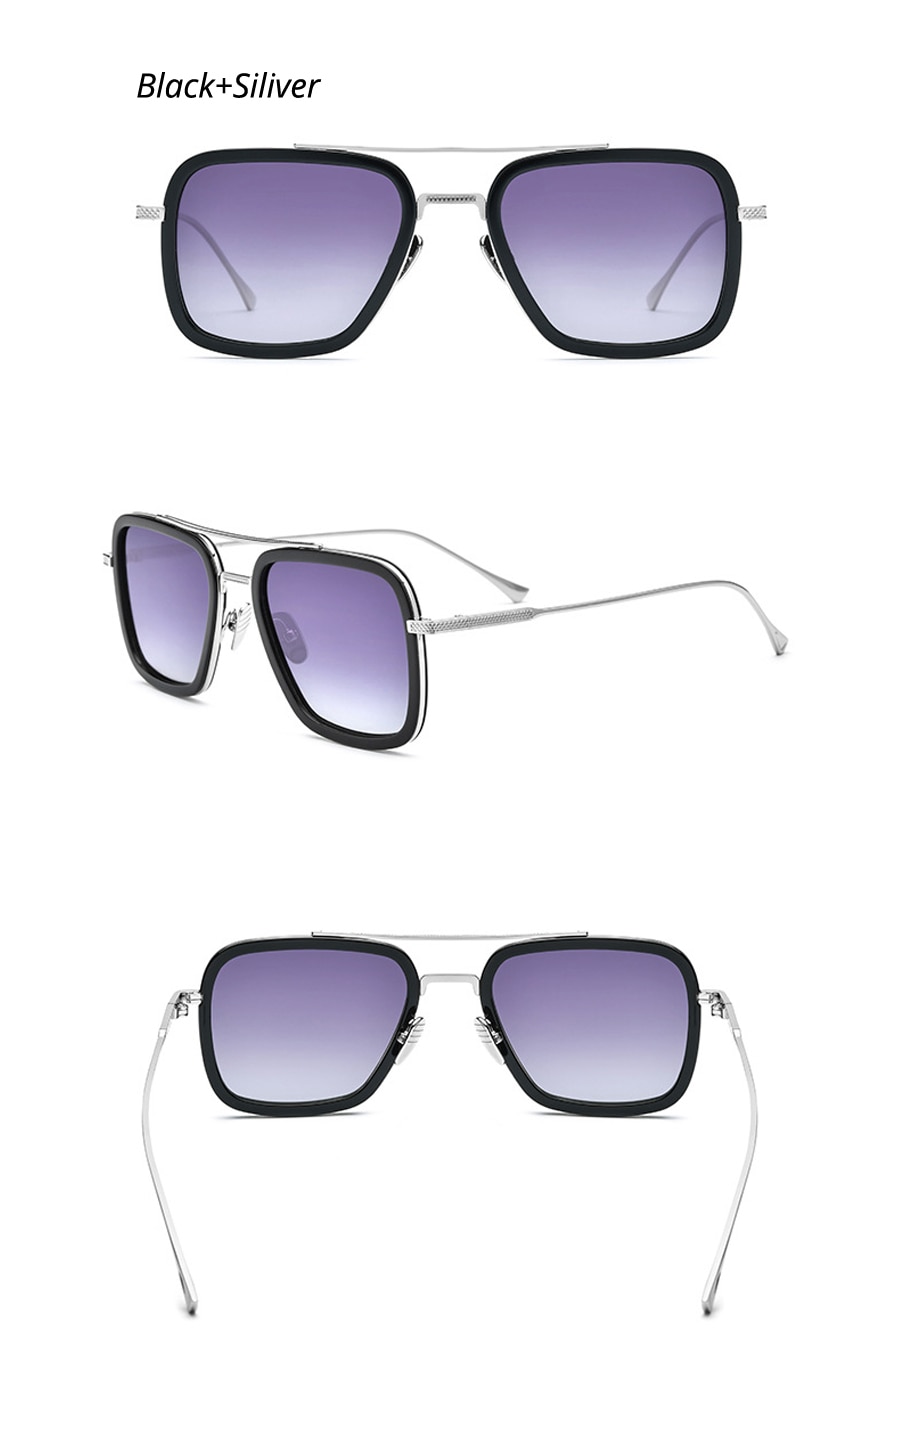 2020-Men-Polarized-Sunglasses-3-Colors-SiliverGoldBlue-Square-Metal-Frame-Come-With-Box-4000342657125